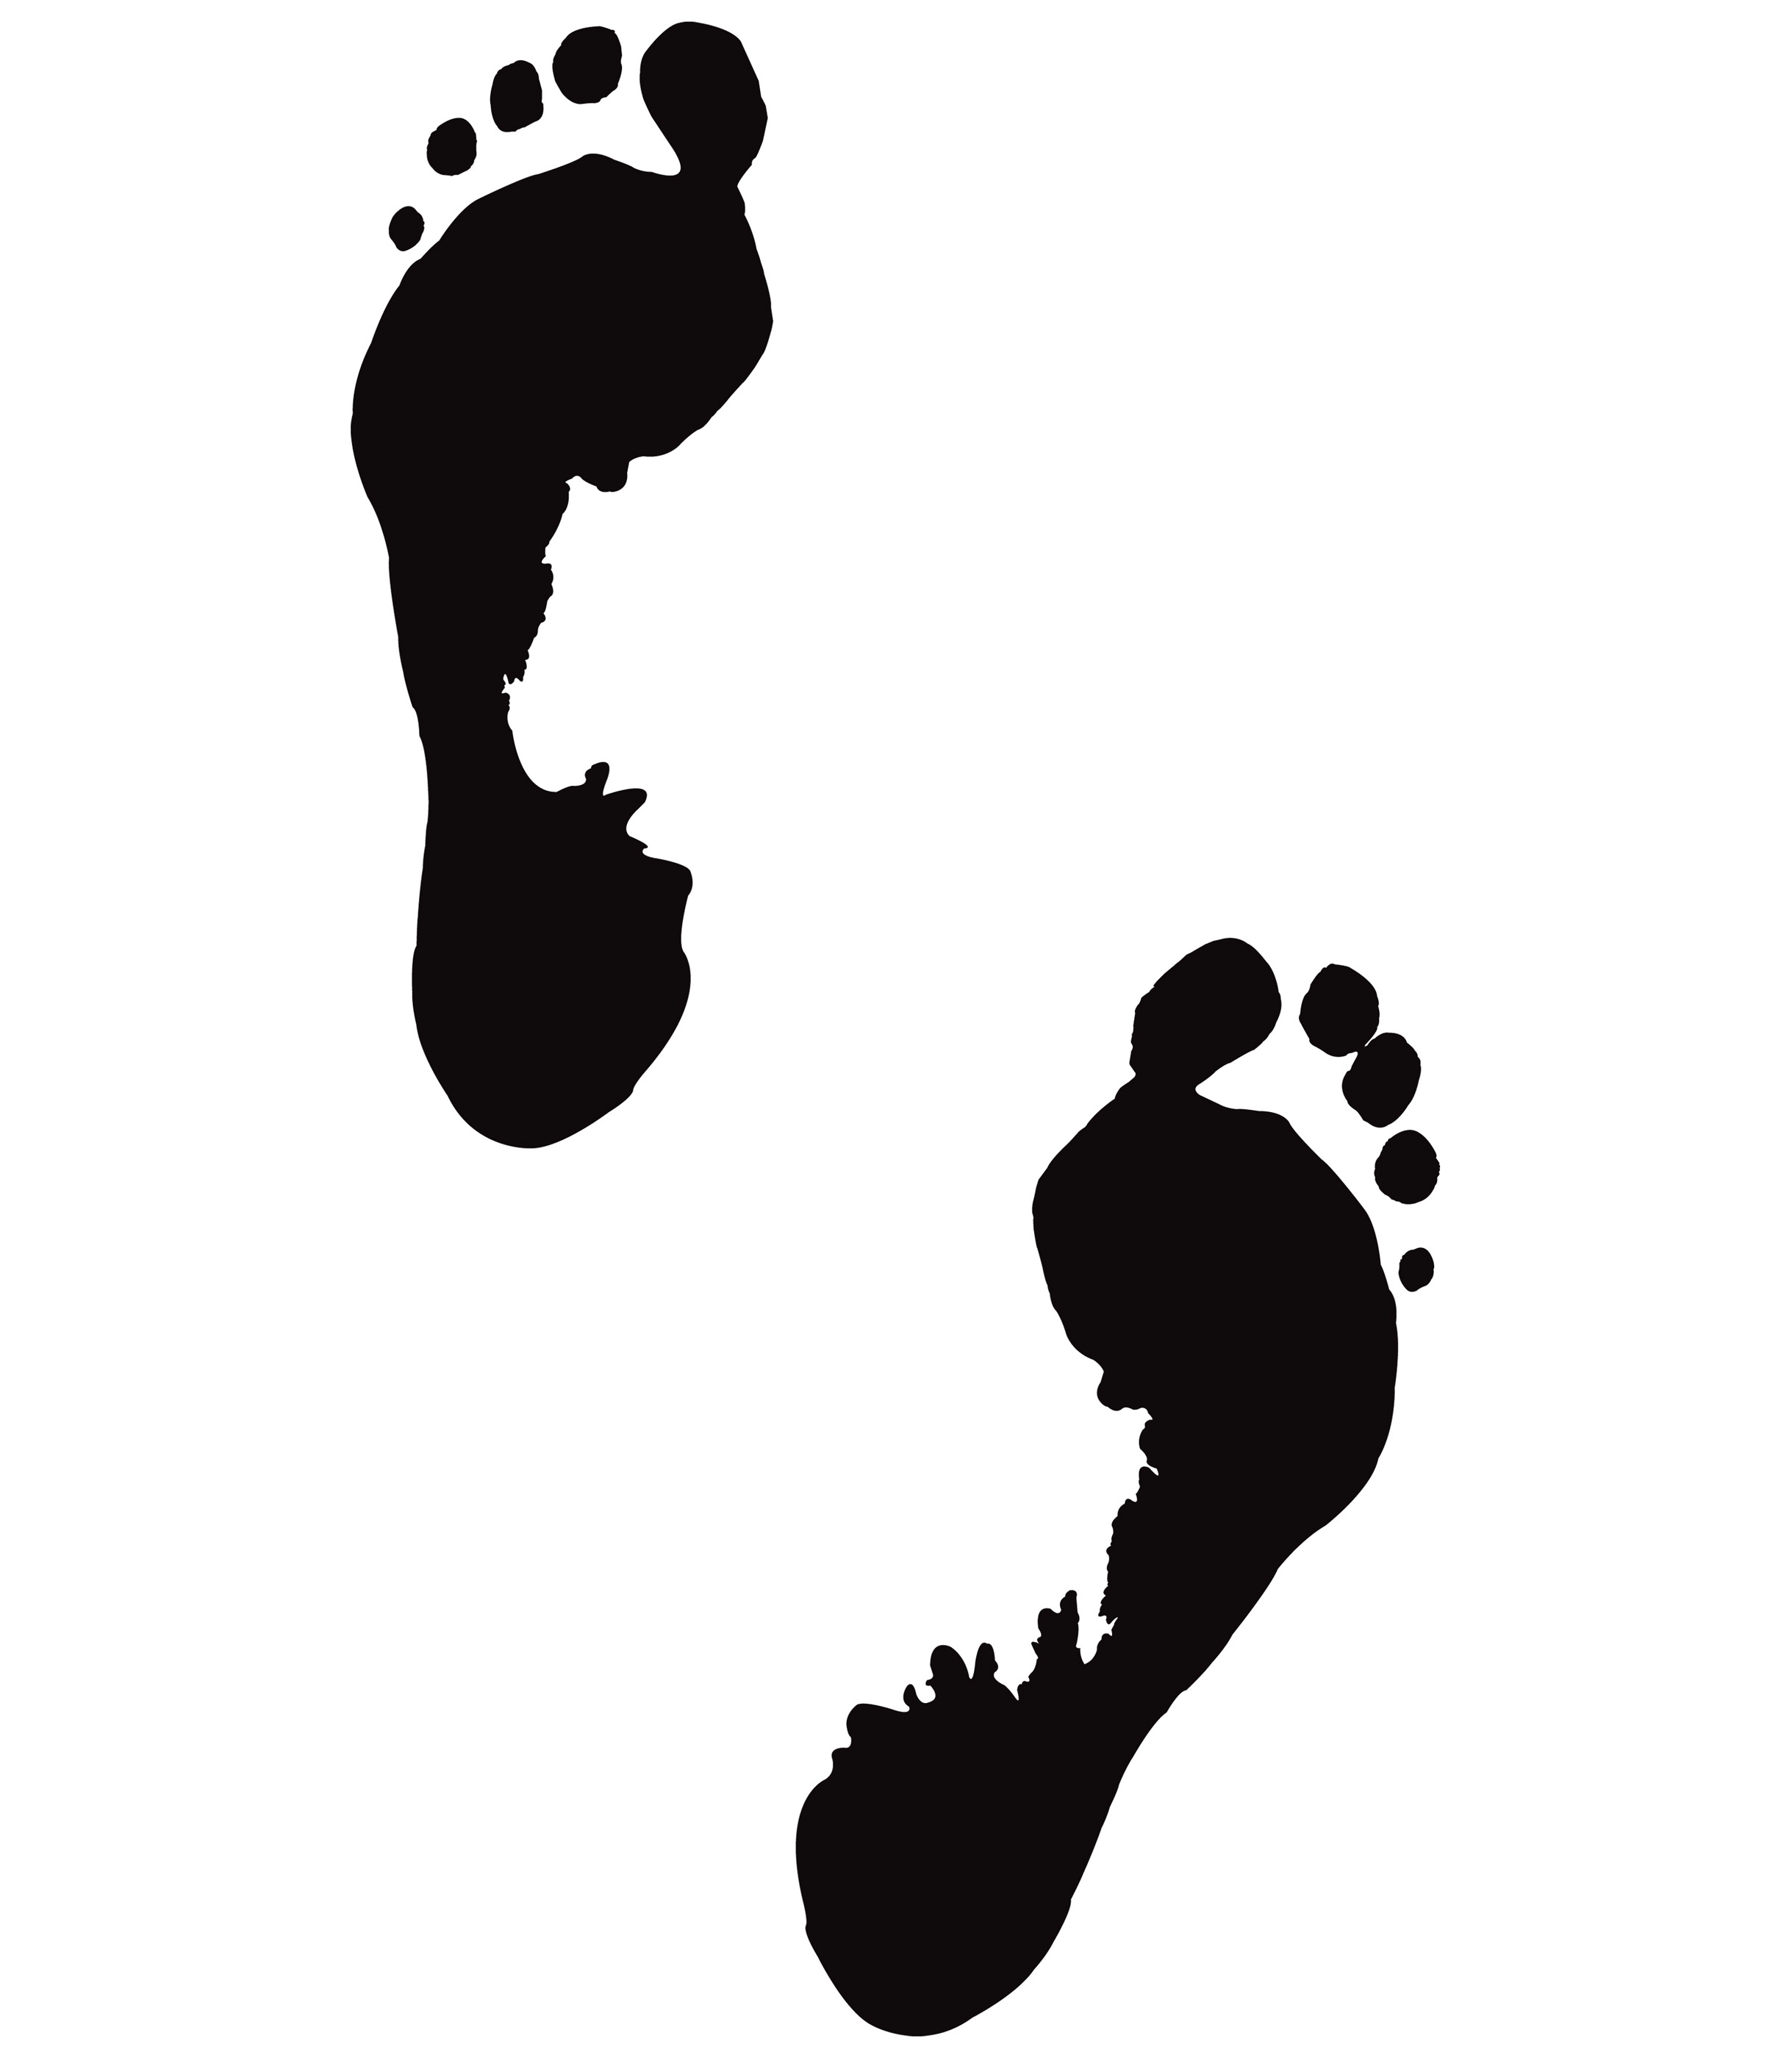 Free Footprint Vector, Download Free Footprint Vector png images, Free